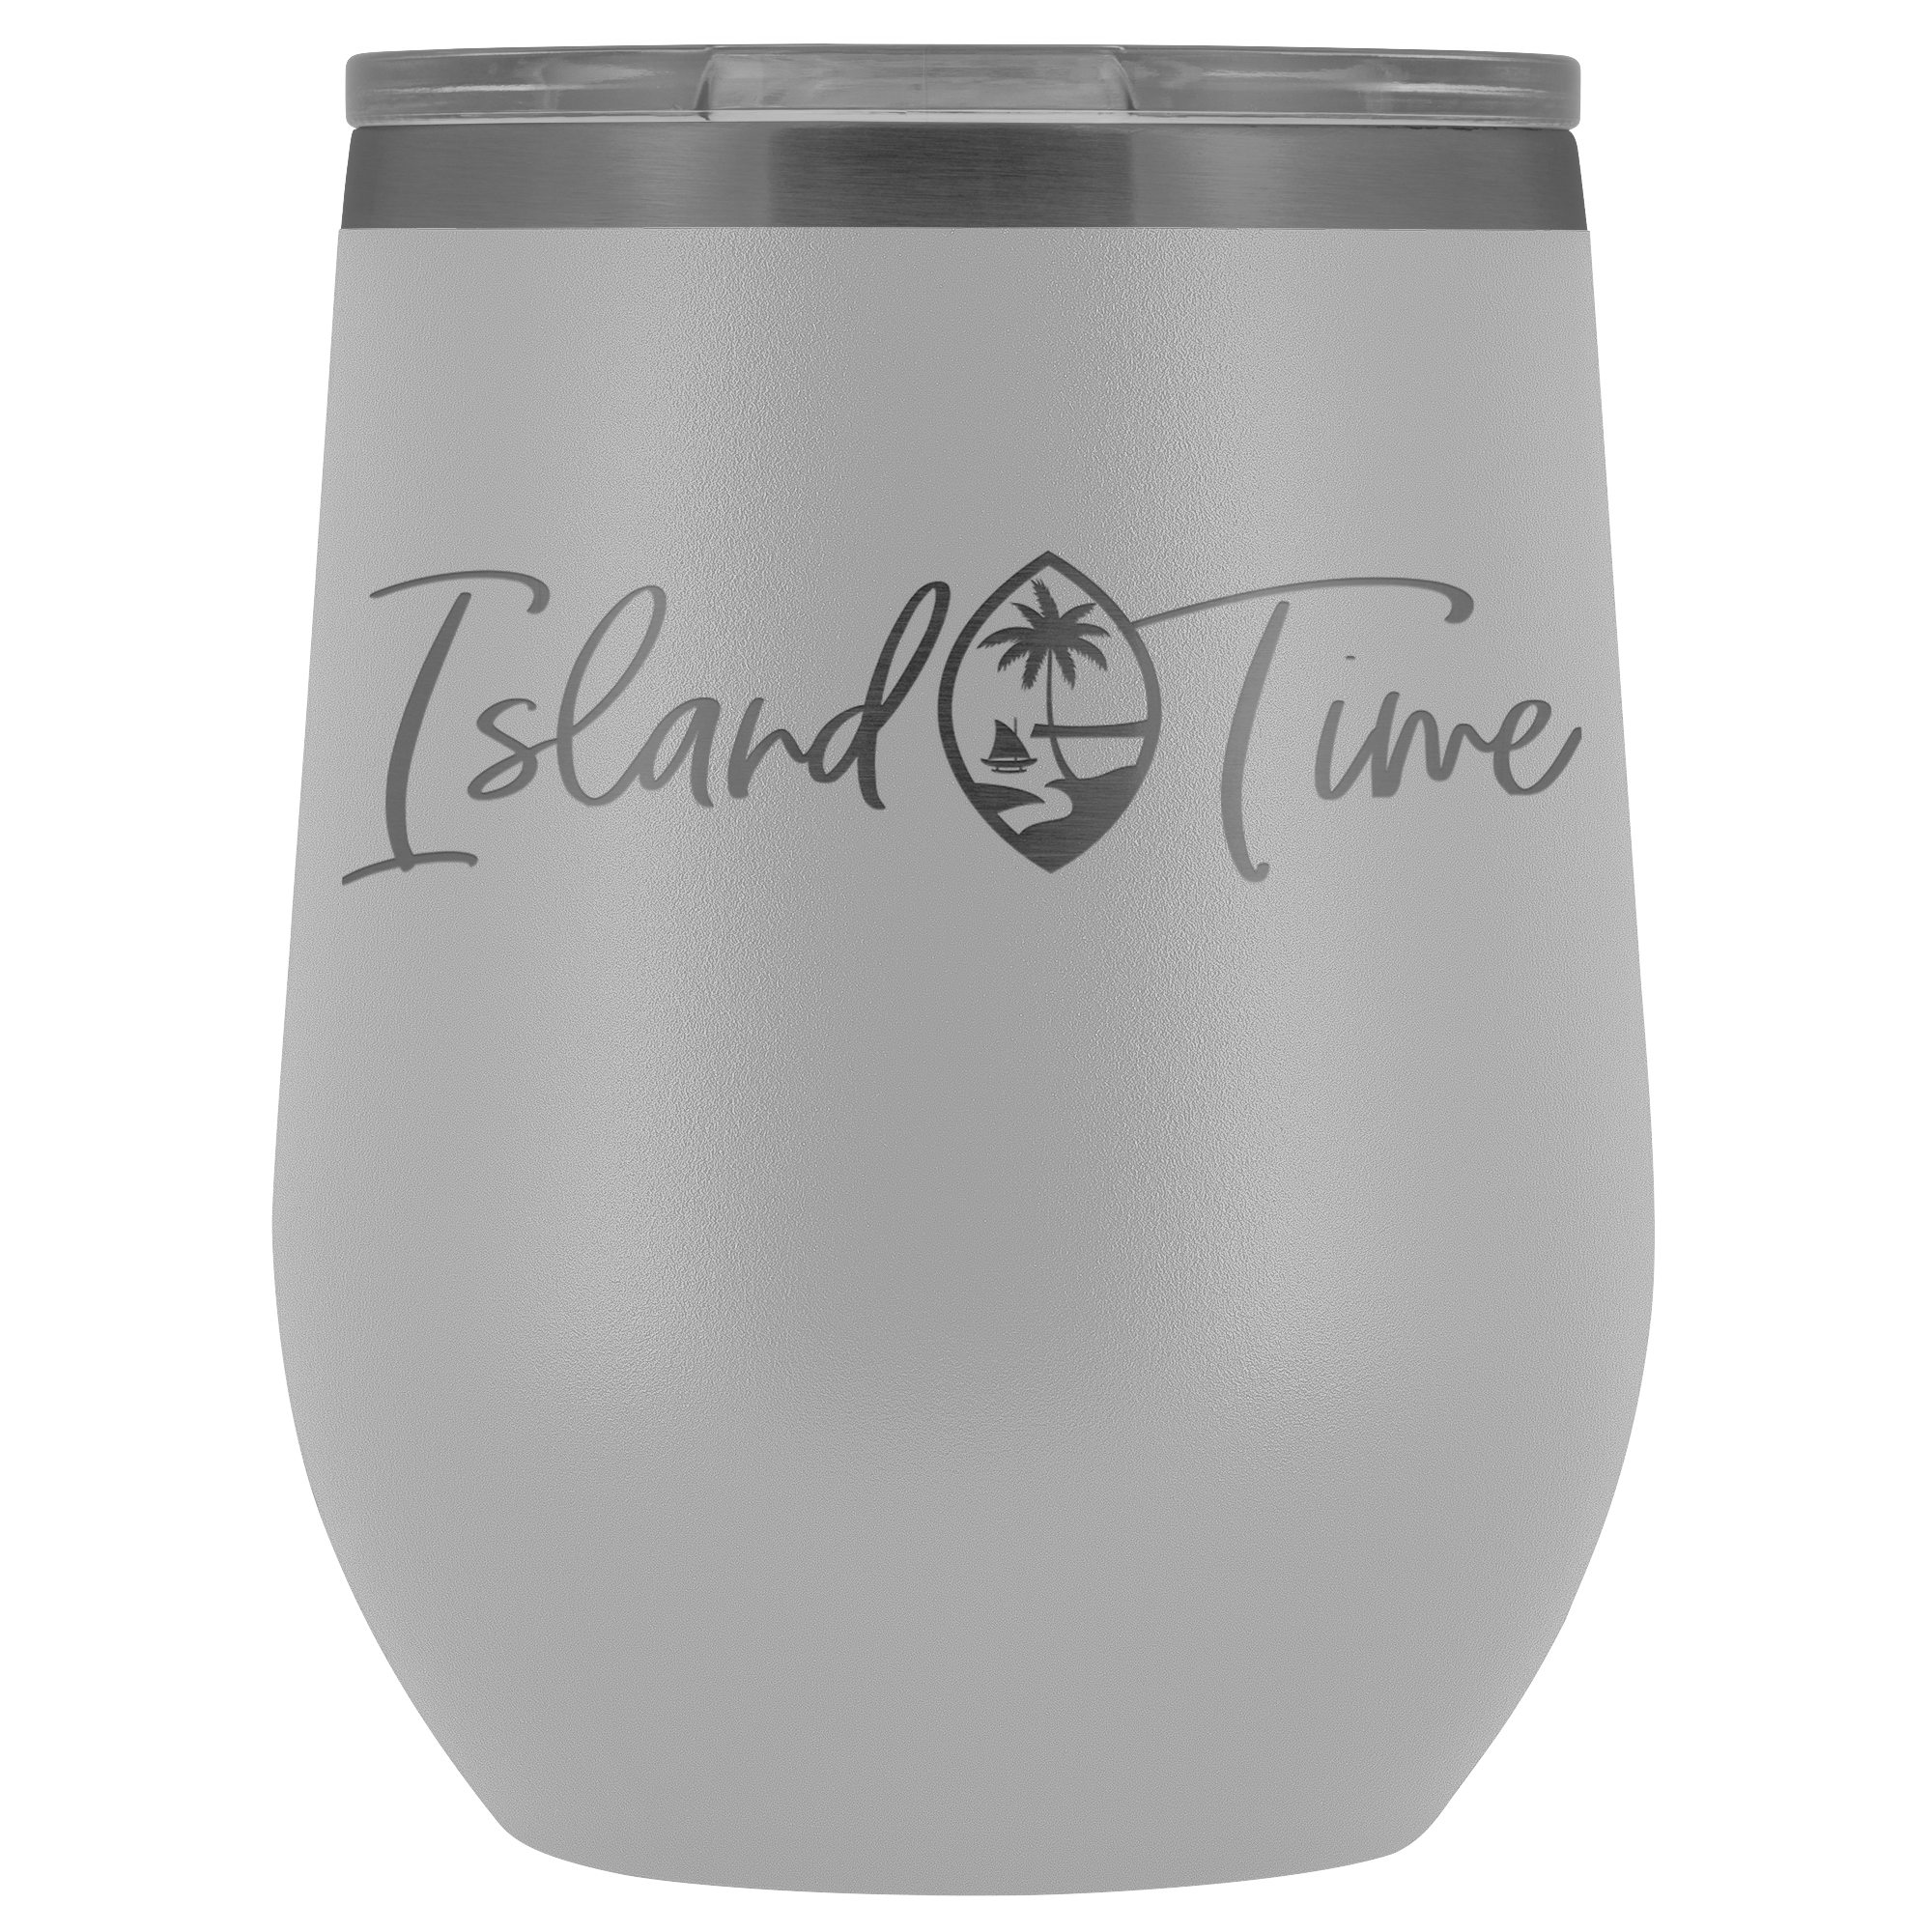 Island Time Guam Seal Wine Tumbler